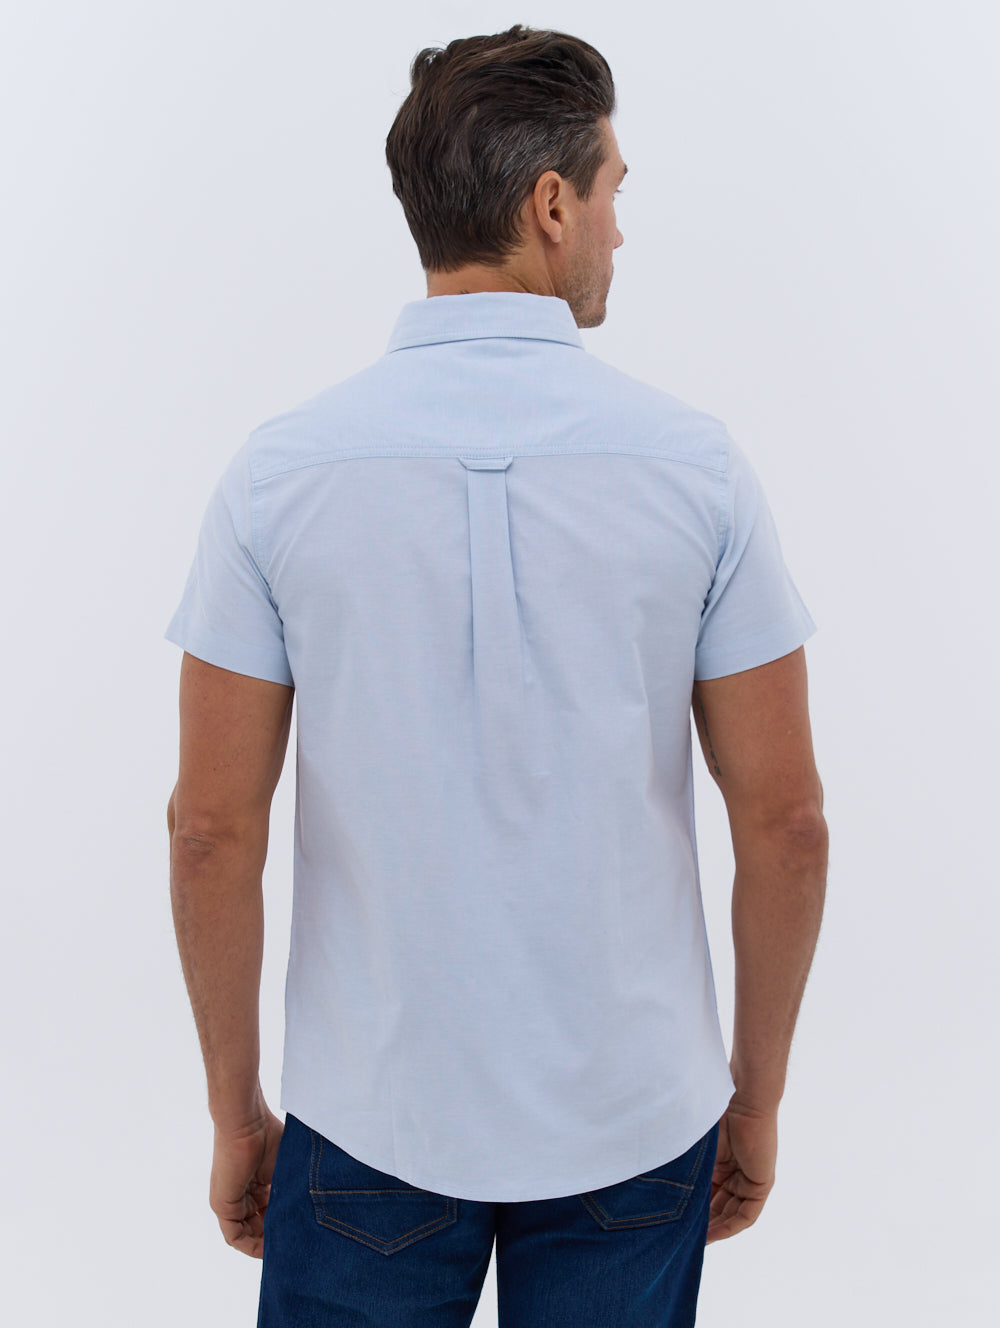 Bowdon Short Sleeve Oxford Shirt - BN2G124276